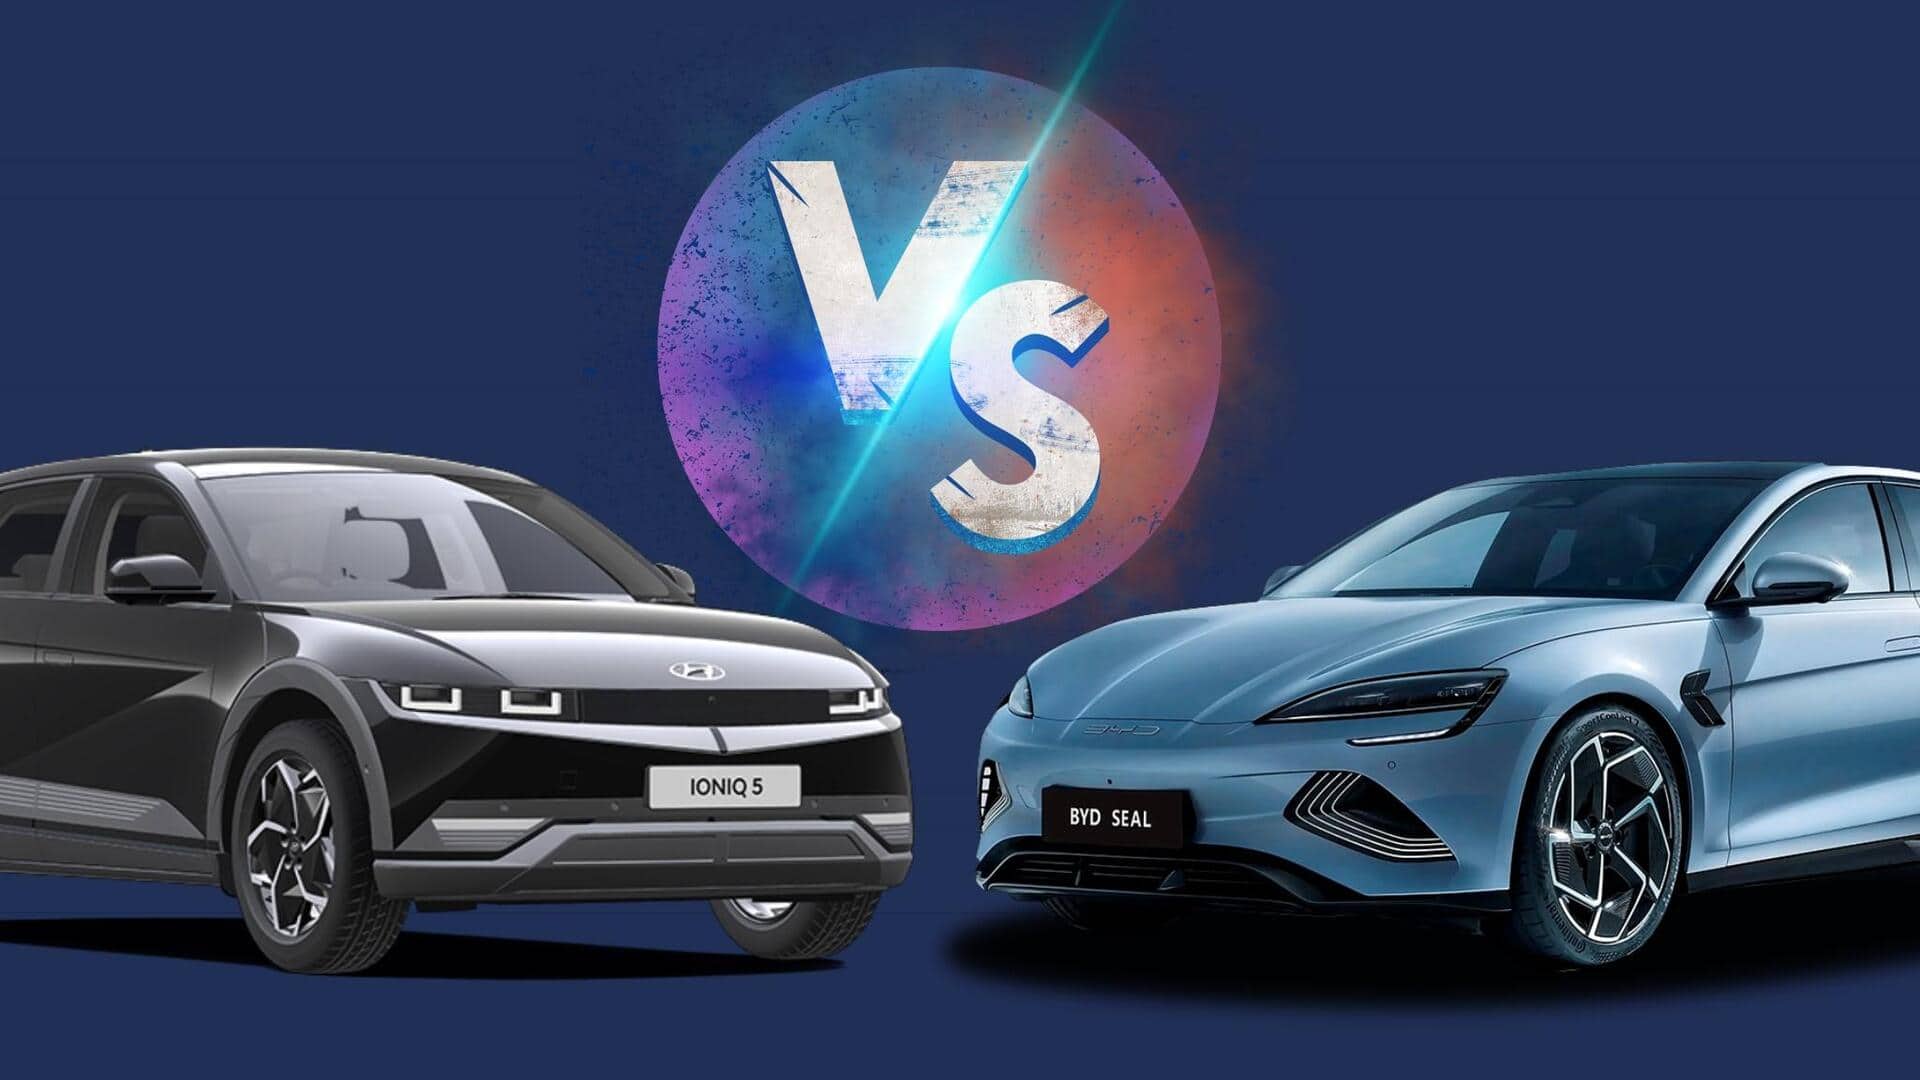 BYD Seal or Hyundai IONIQ 5: Which EV is better